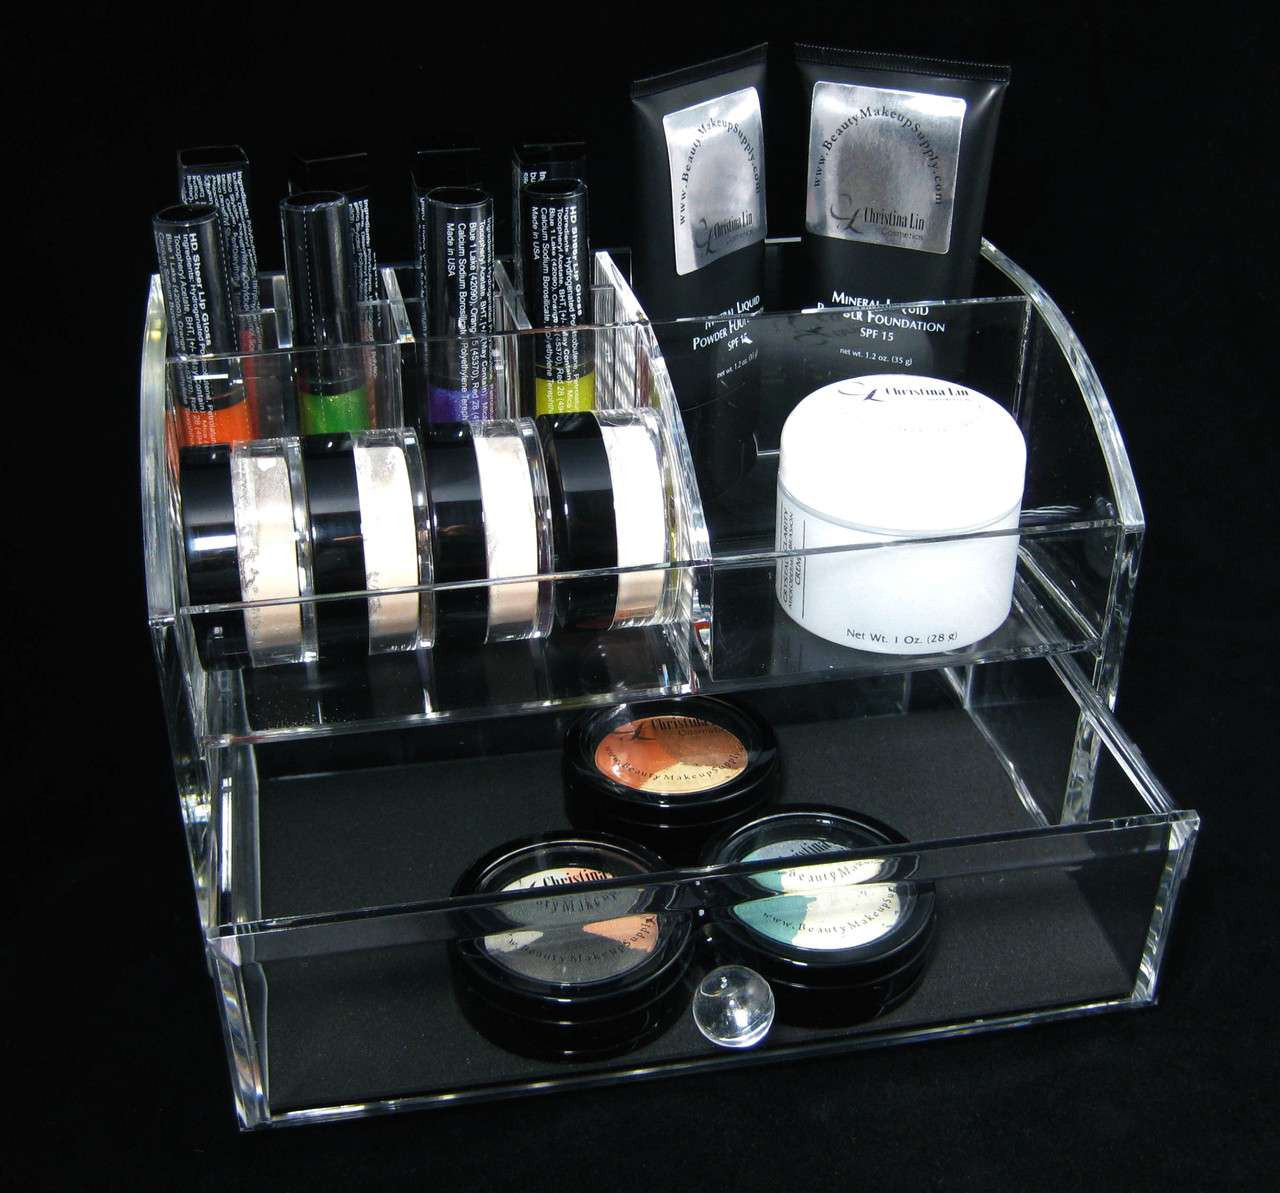 Deluxe Acrylic Cosmetic Makeup Drawer Organizers • 5633 Beauty